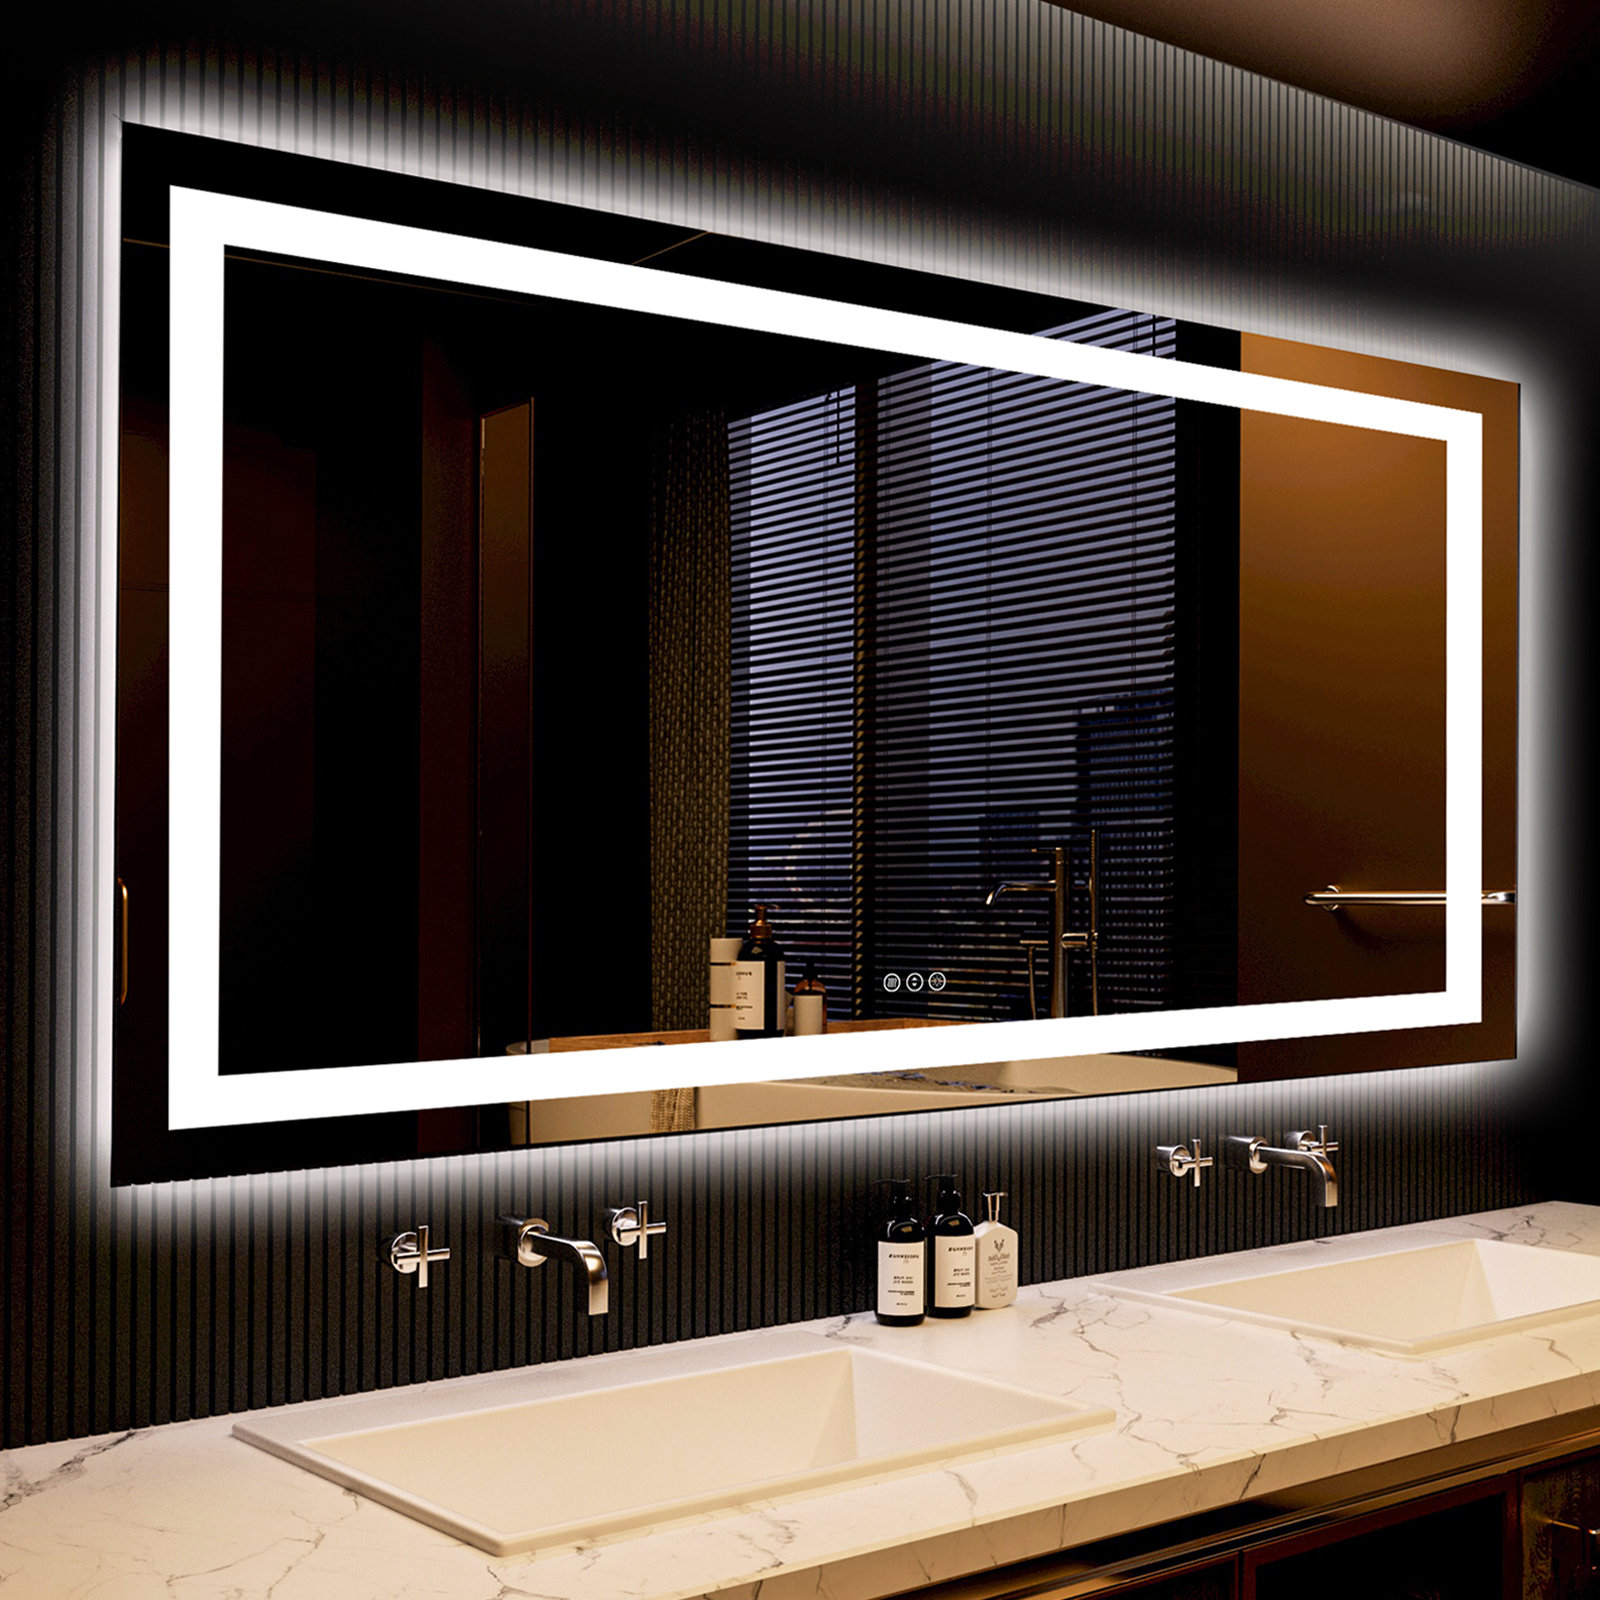 LED Black Framed Bathroom Vanity Mirror, Illuminated Dimmable Anti Fog Makeup Mirror, 3 Color Light Orren Ellis Size: 36 x 24